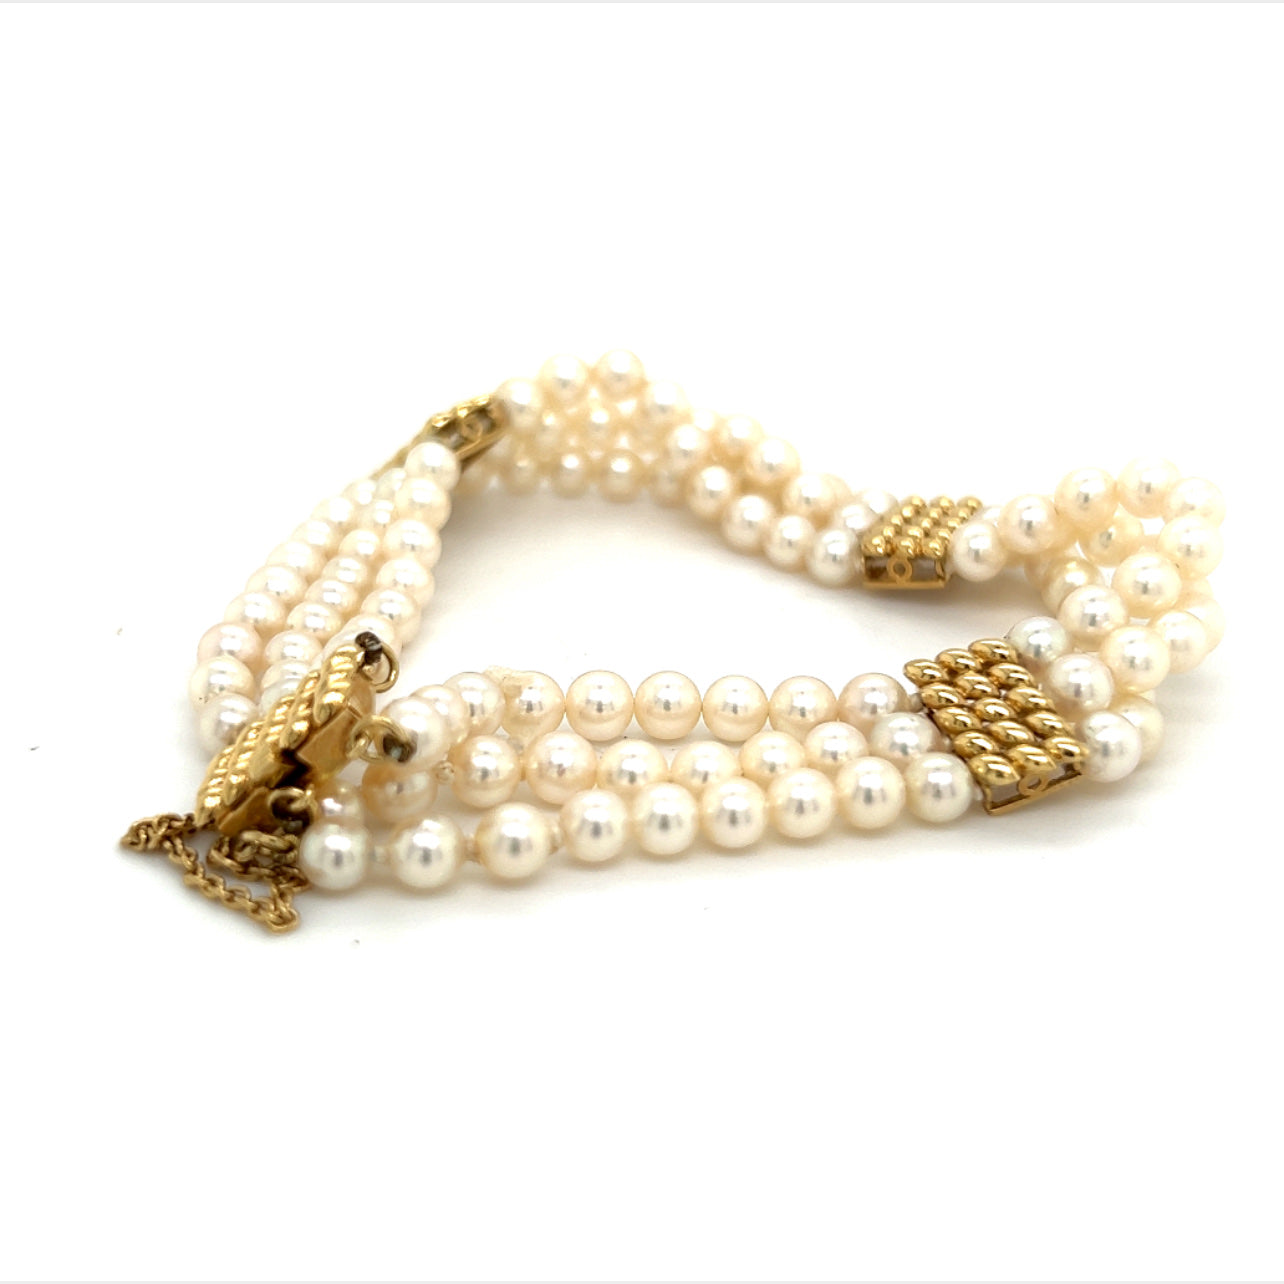 Mikimoto Estate Akoya Pearl Bracelet 7.5" 14k Yellow Gold 4 mm Certified $4,950 219126